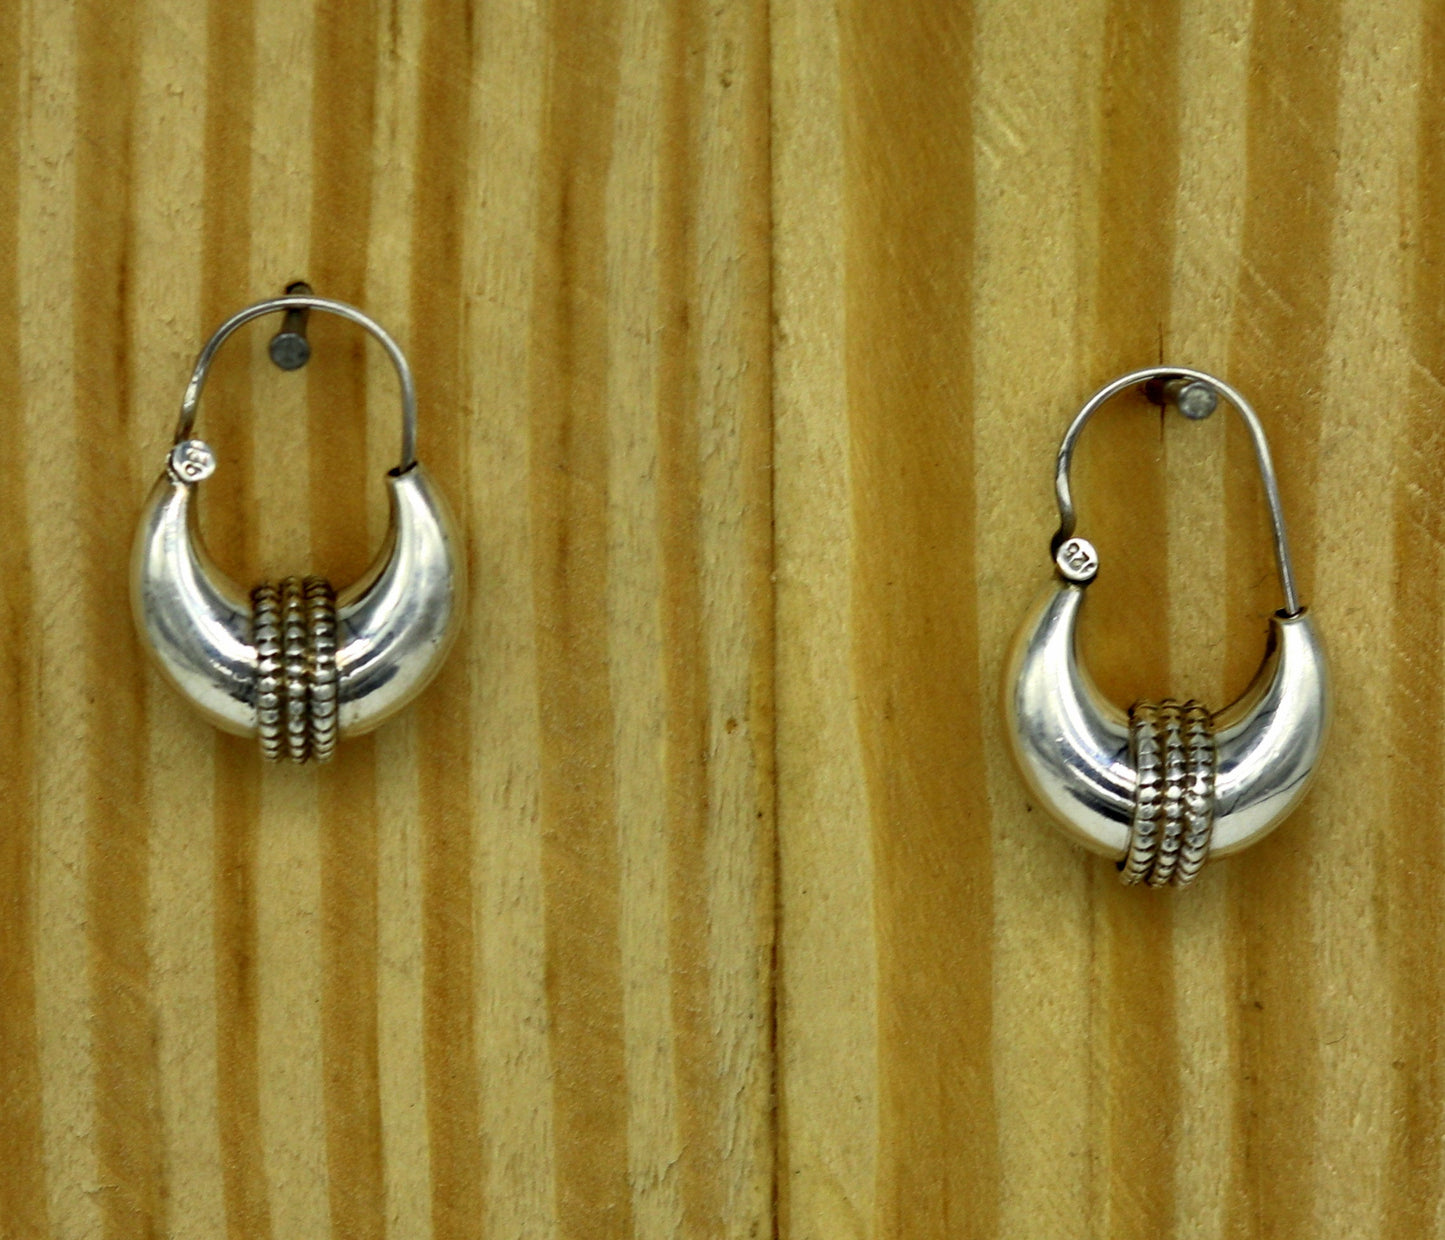 925 sterling silver handmade vintage antique design amazing design hoops earring bali, customized earring gift tribal ethnic jewelry ske13 - TRIBAL ORNAMENTS